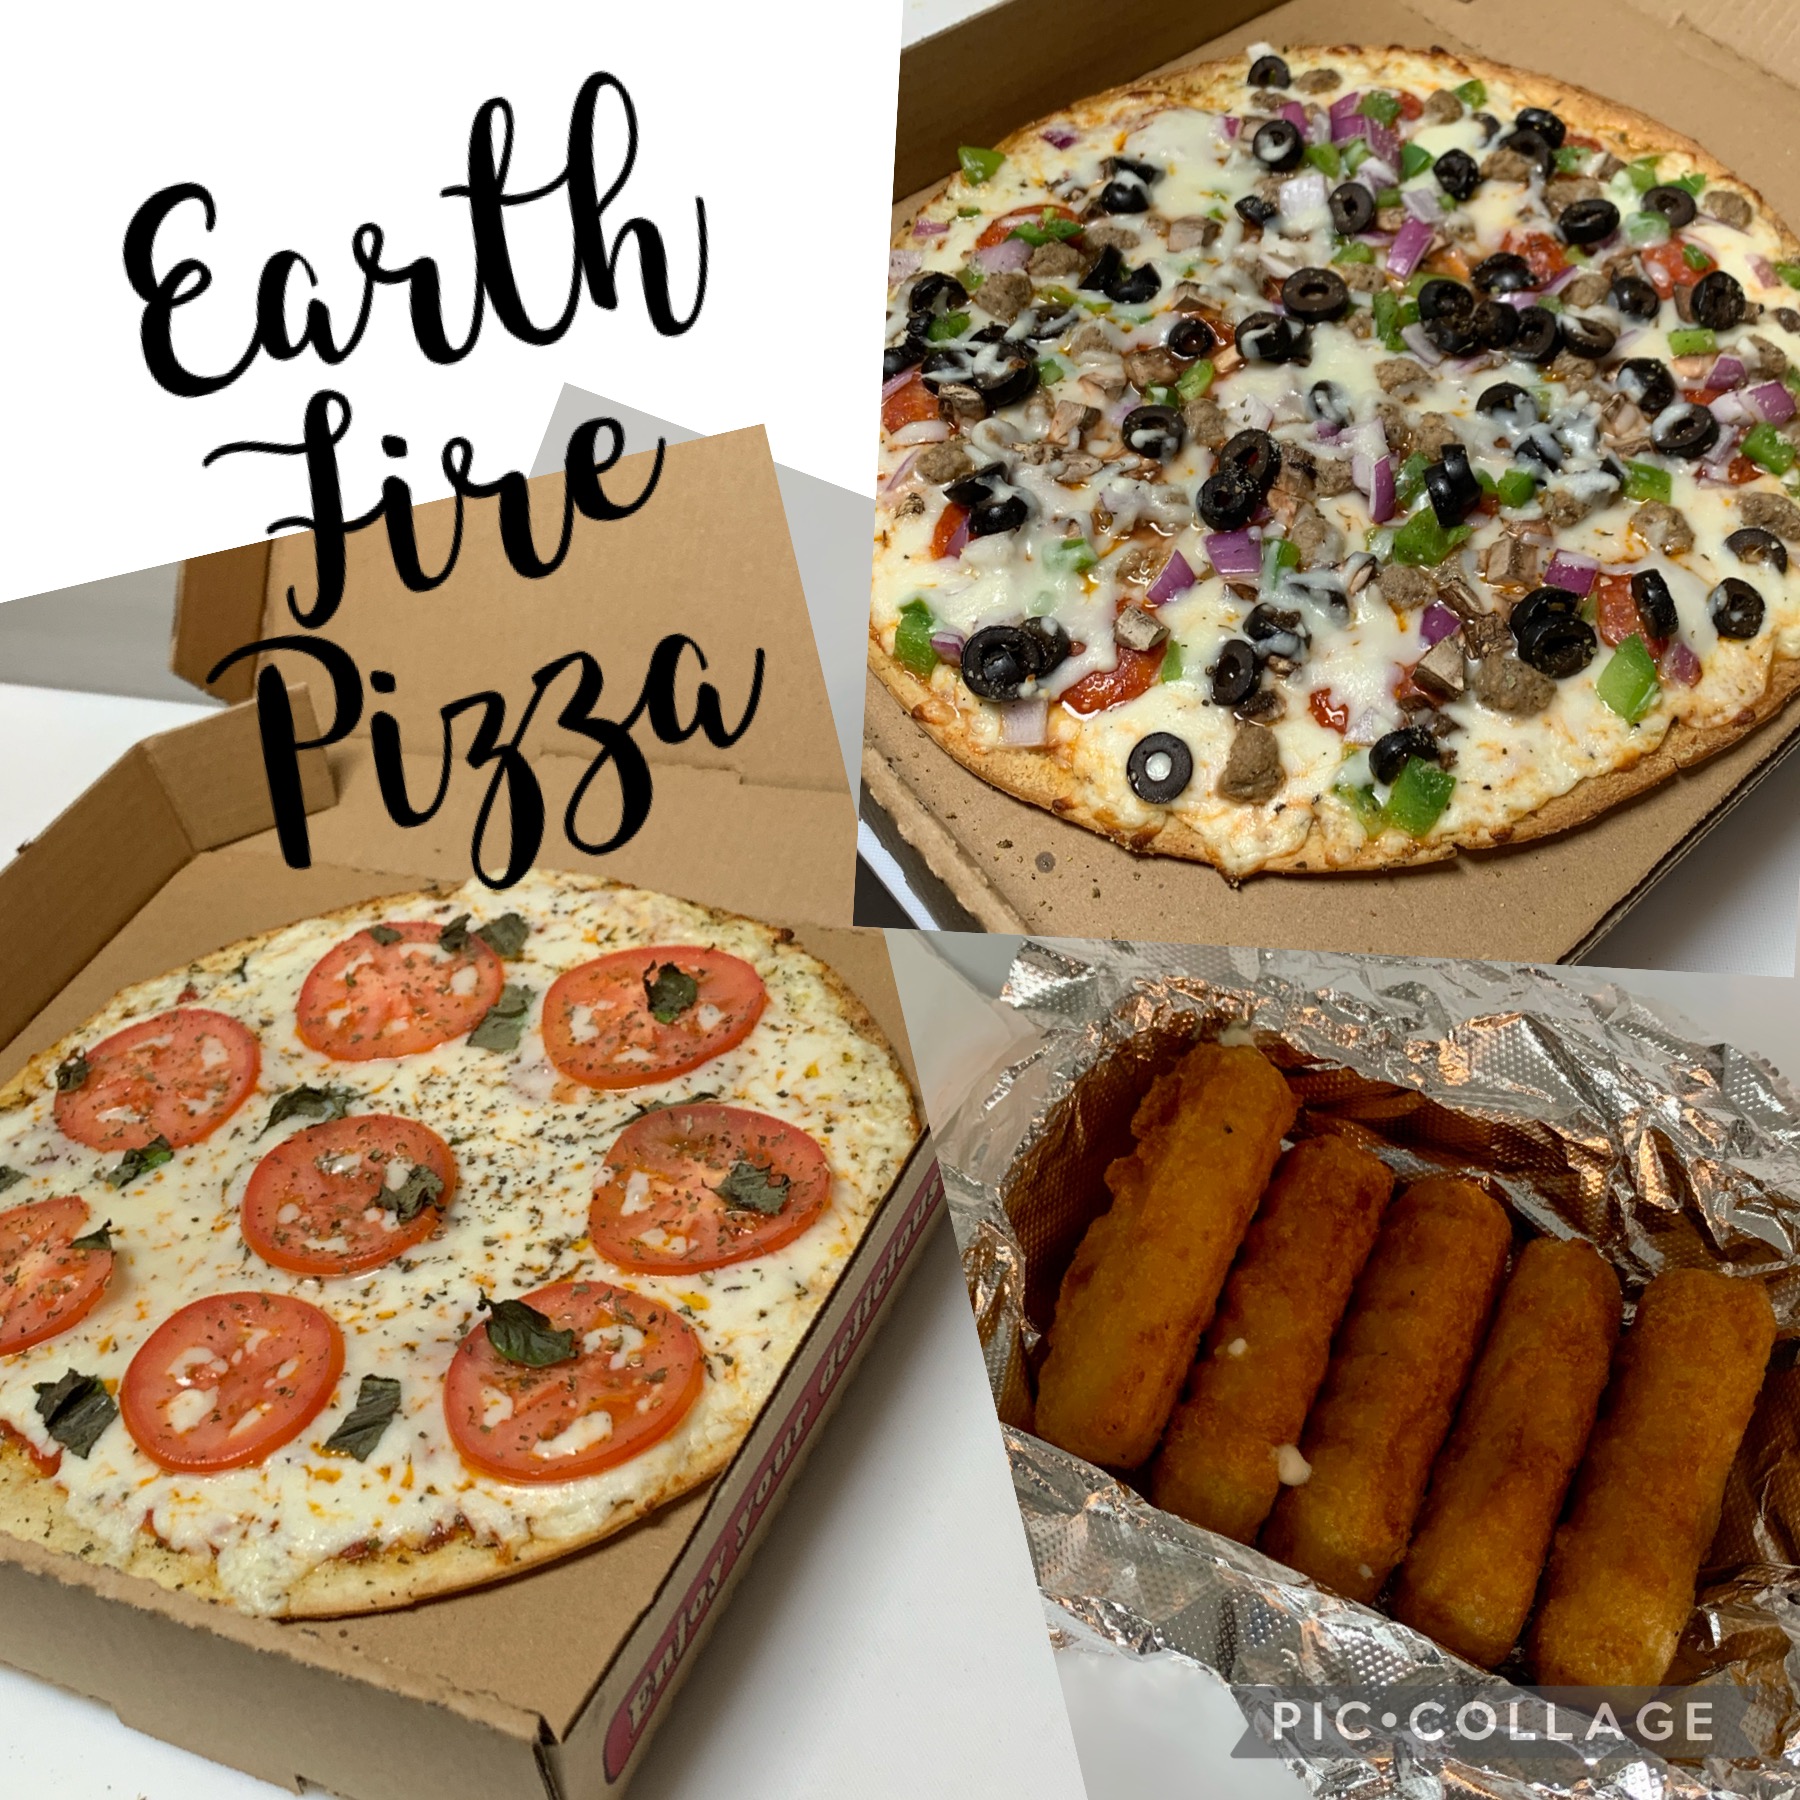 Earth Fire Pizza